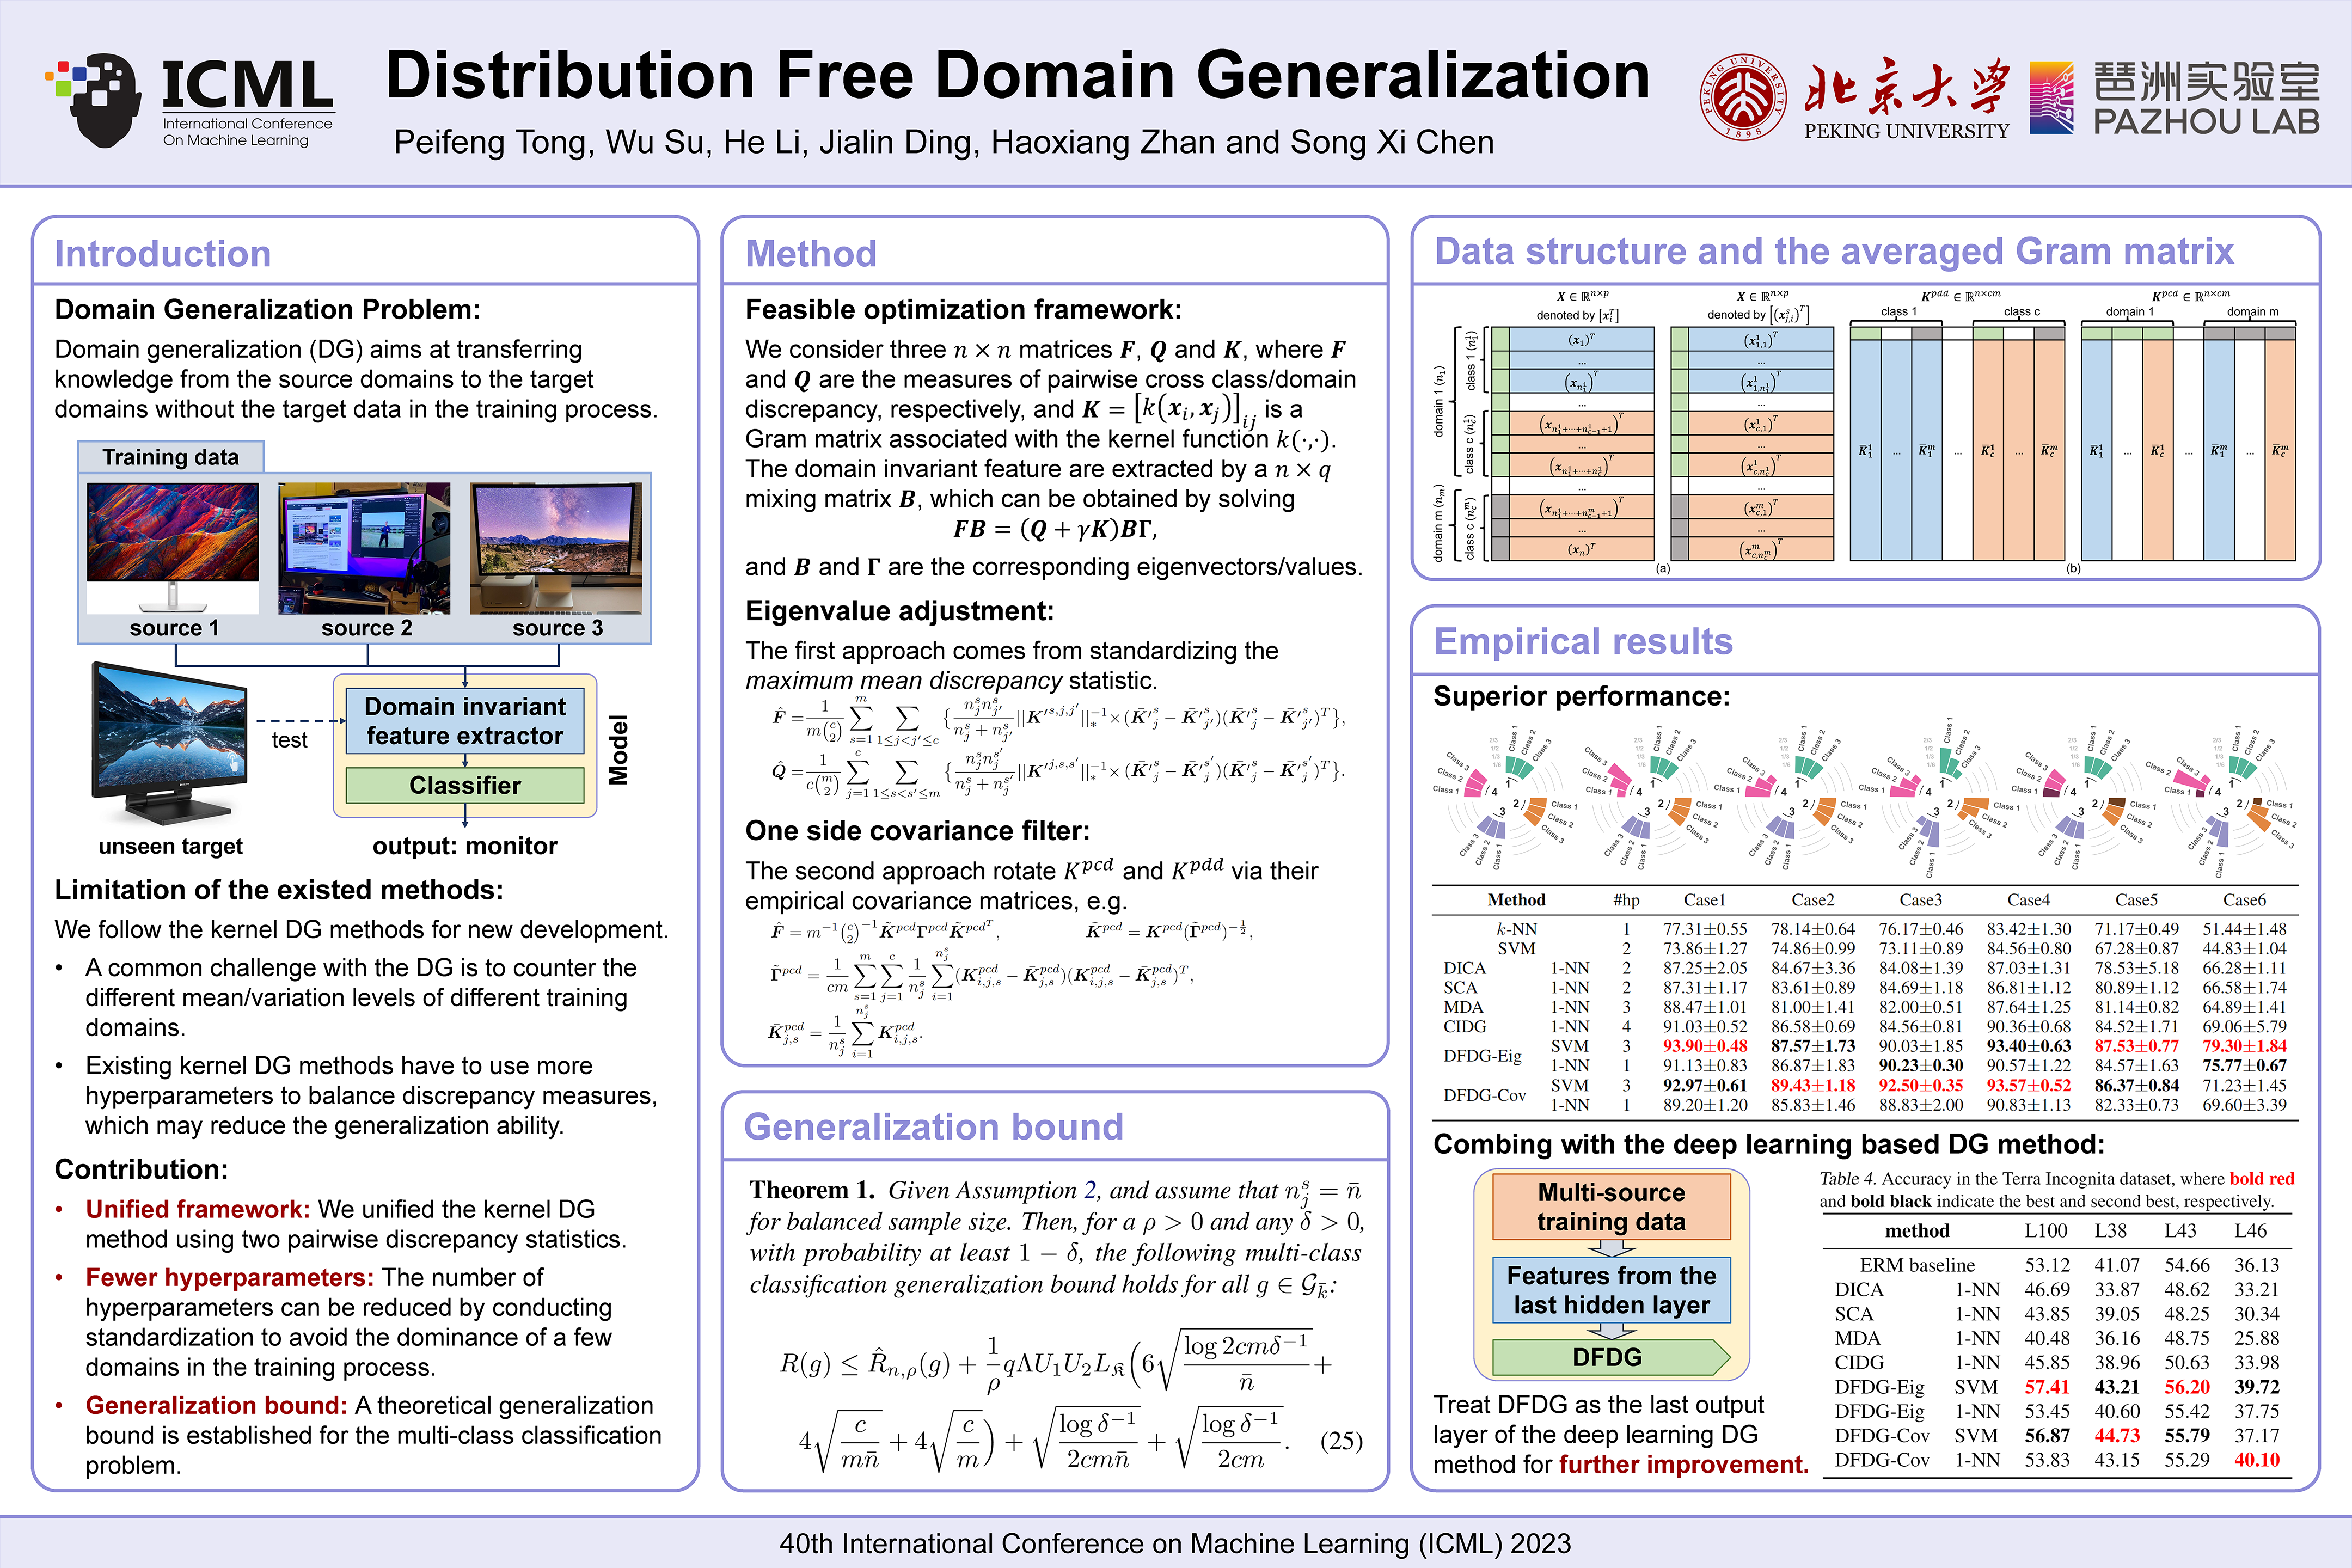 Distribution Free Domain Generalization paper illustration